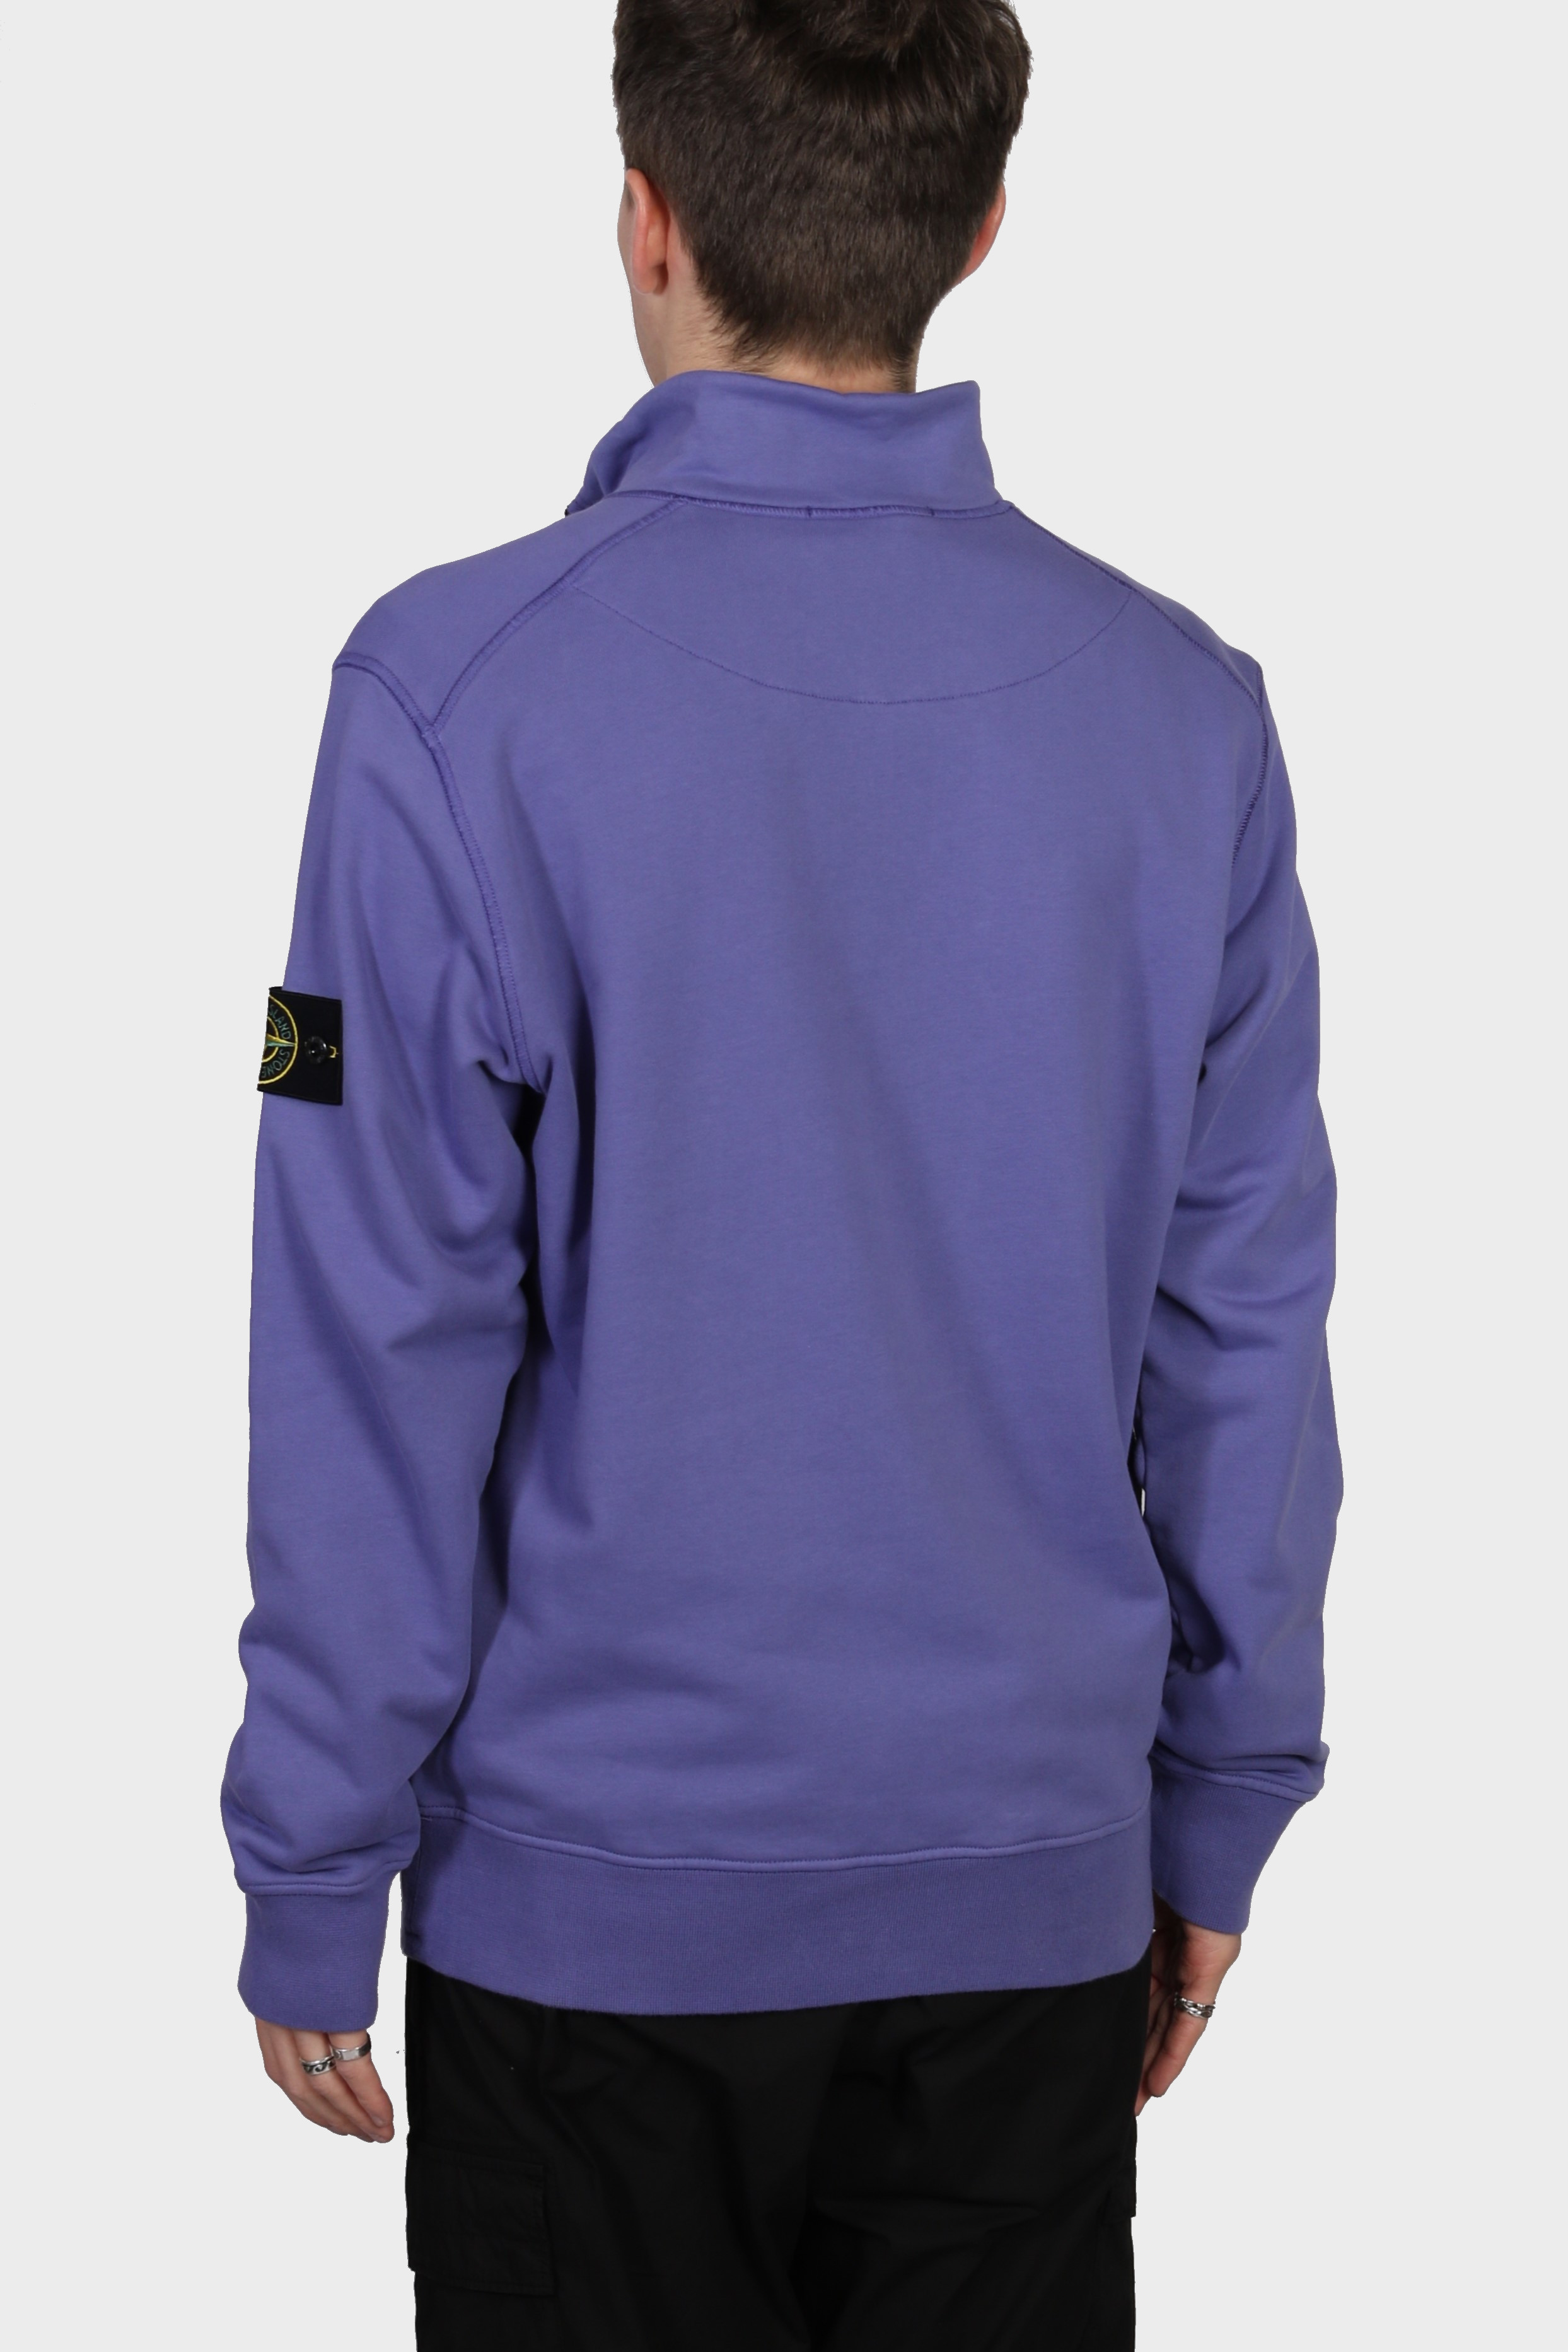 STONE ISLAND Half Zip Sweatshirt in Lilac 2XL